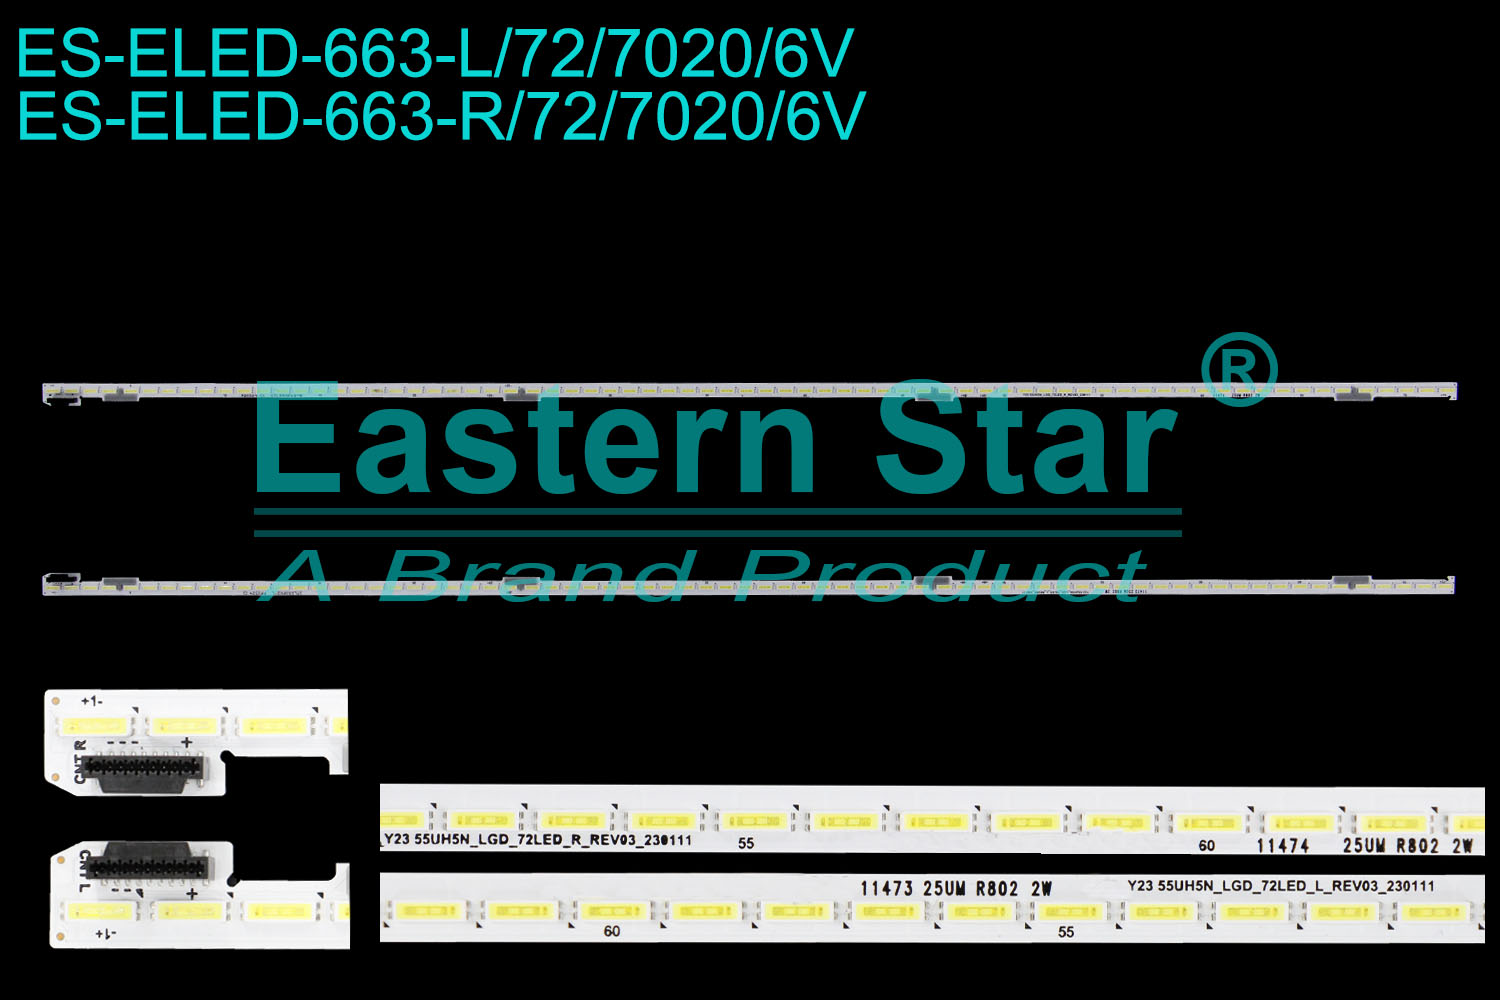 ES-ELED-663 ELED/EDGE TV backlight use for 55'' Lg L: 11473 Y23 55UH5N_LGD_72LED_L_REV03_230111 25UM R802 2W STLSS0FK2-L PP0324 C1   R: 11474 Y23 55UH5N_LGD_72LED_R_REV03_230111 25UM R802 2W STLSS0FK2-R P20324 C1 LED STRIPS(/)